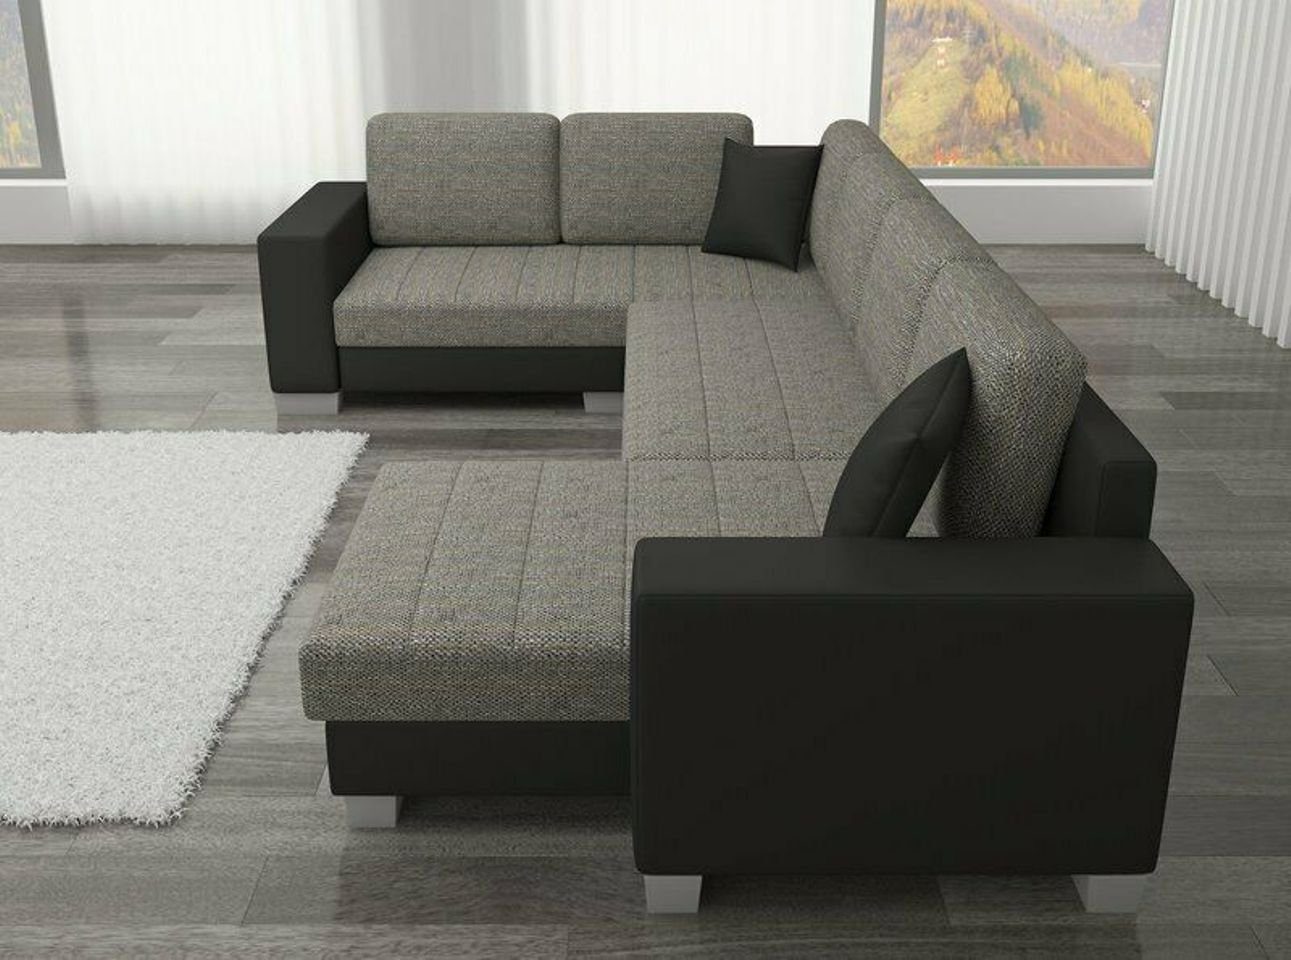 JVmoebel Ecksofa Design Ecksofa Schlafsofa Bettfunktion Couch Leder Polster Textil, Mit Bettfunktion Dunkelgrau/Schwarz